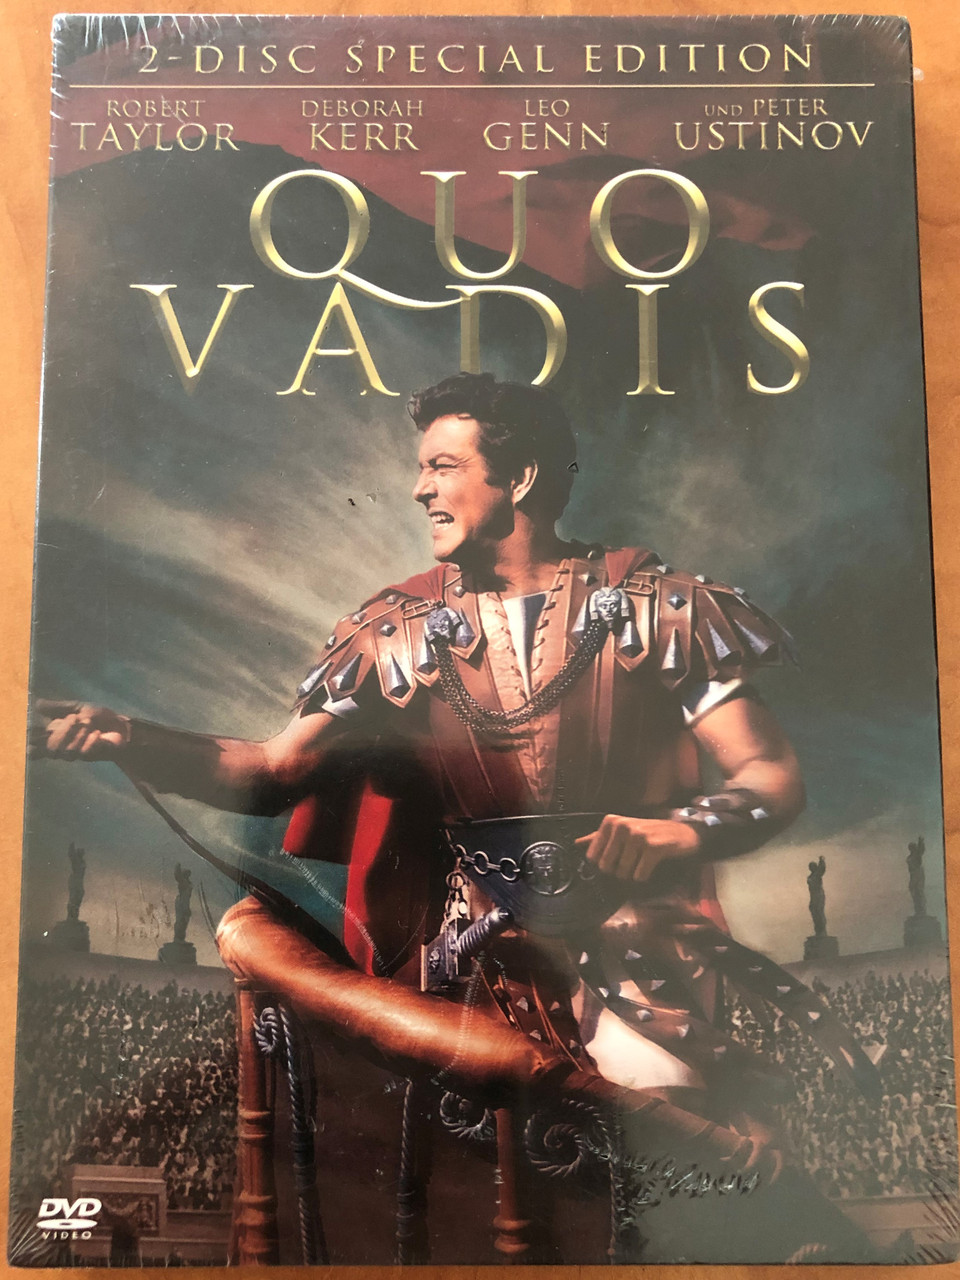 Quo Vadis DVD 1951 / Directed by Mervyn LeRoy / Starring: Robert Taylor,  Deborah Kerr, Leo Genn, Peter Ustinov / American epic historical drama film  - bibleinmylanguage